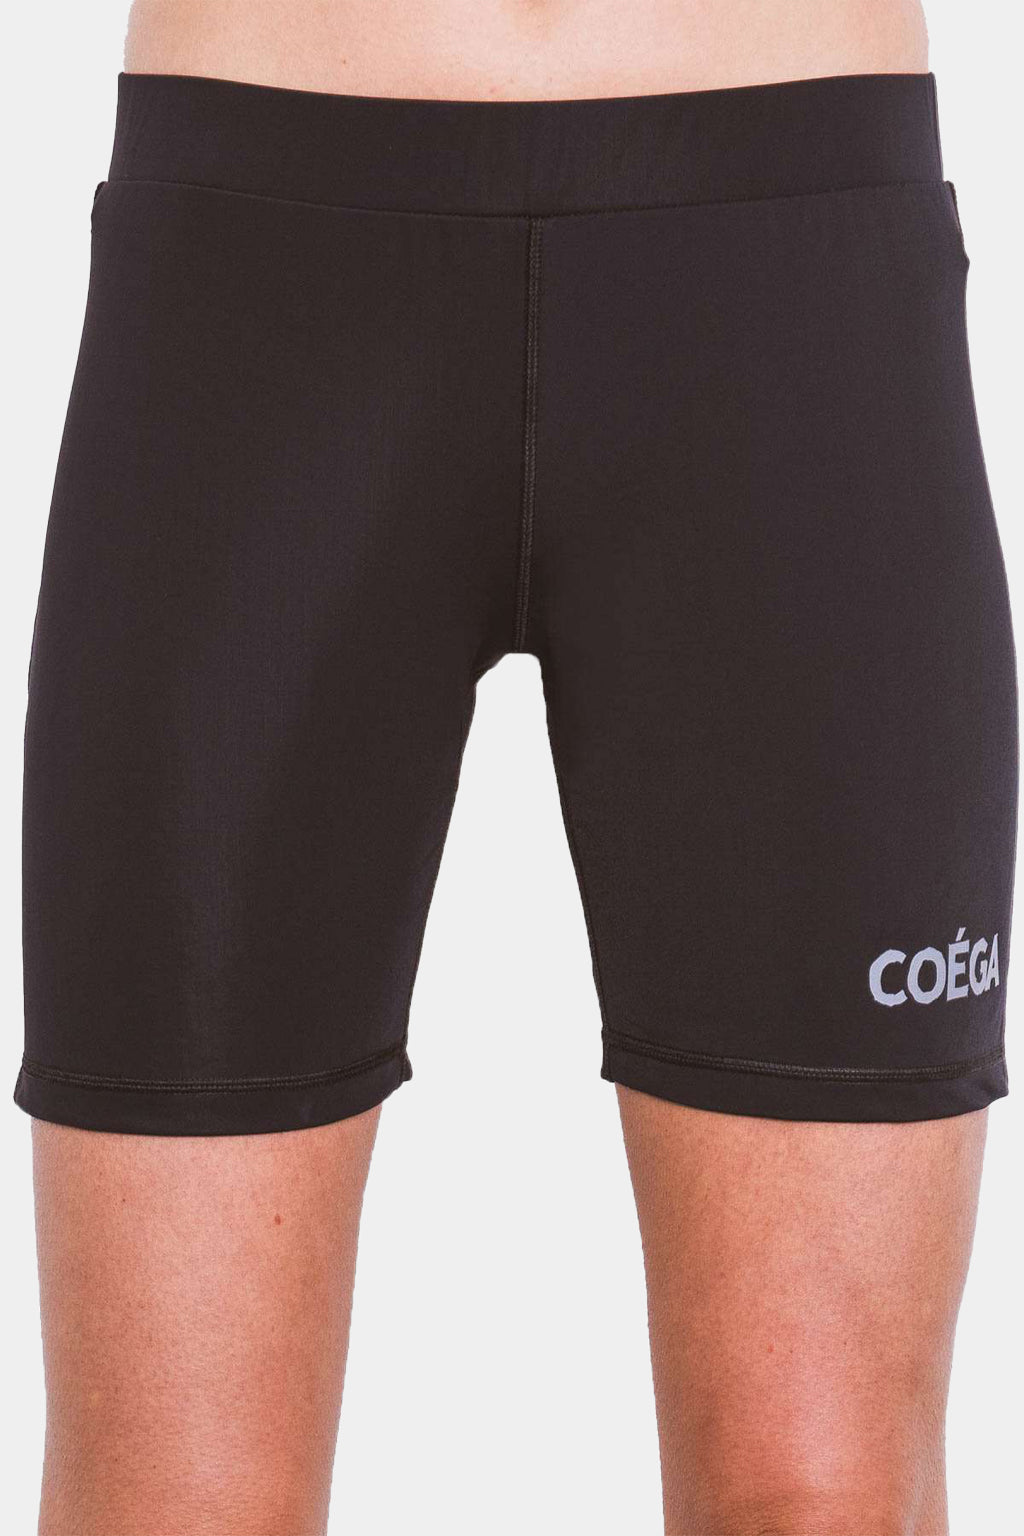 Coega - Ladies Swim Shorts